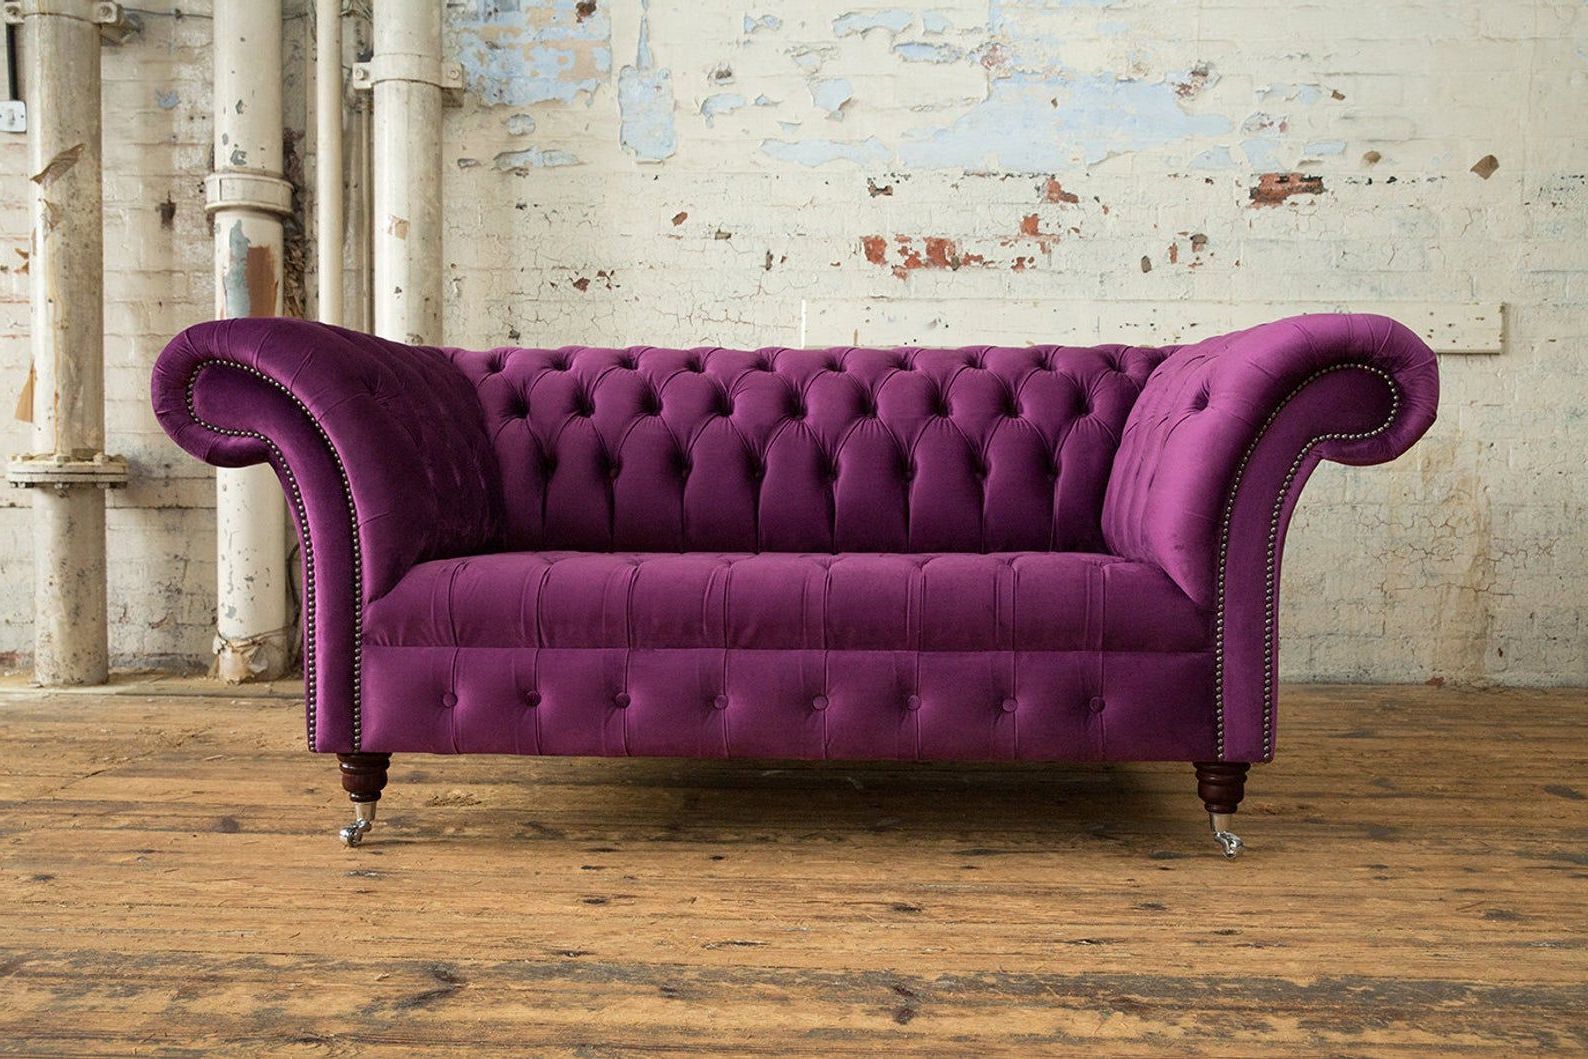 Scarlett Blue Sofas Regarding Most Recent British Handmade Grape Purple Velvet 2 Seater Chesterfield (View 6 of 15)